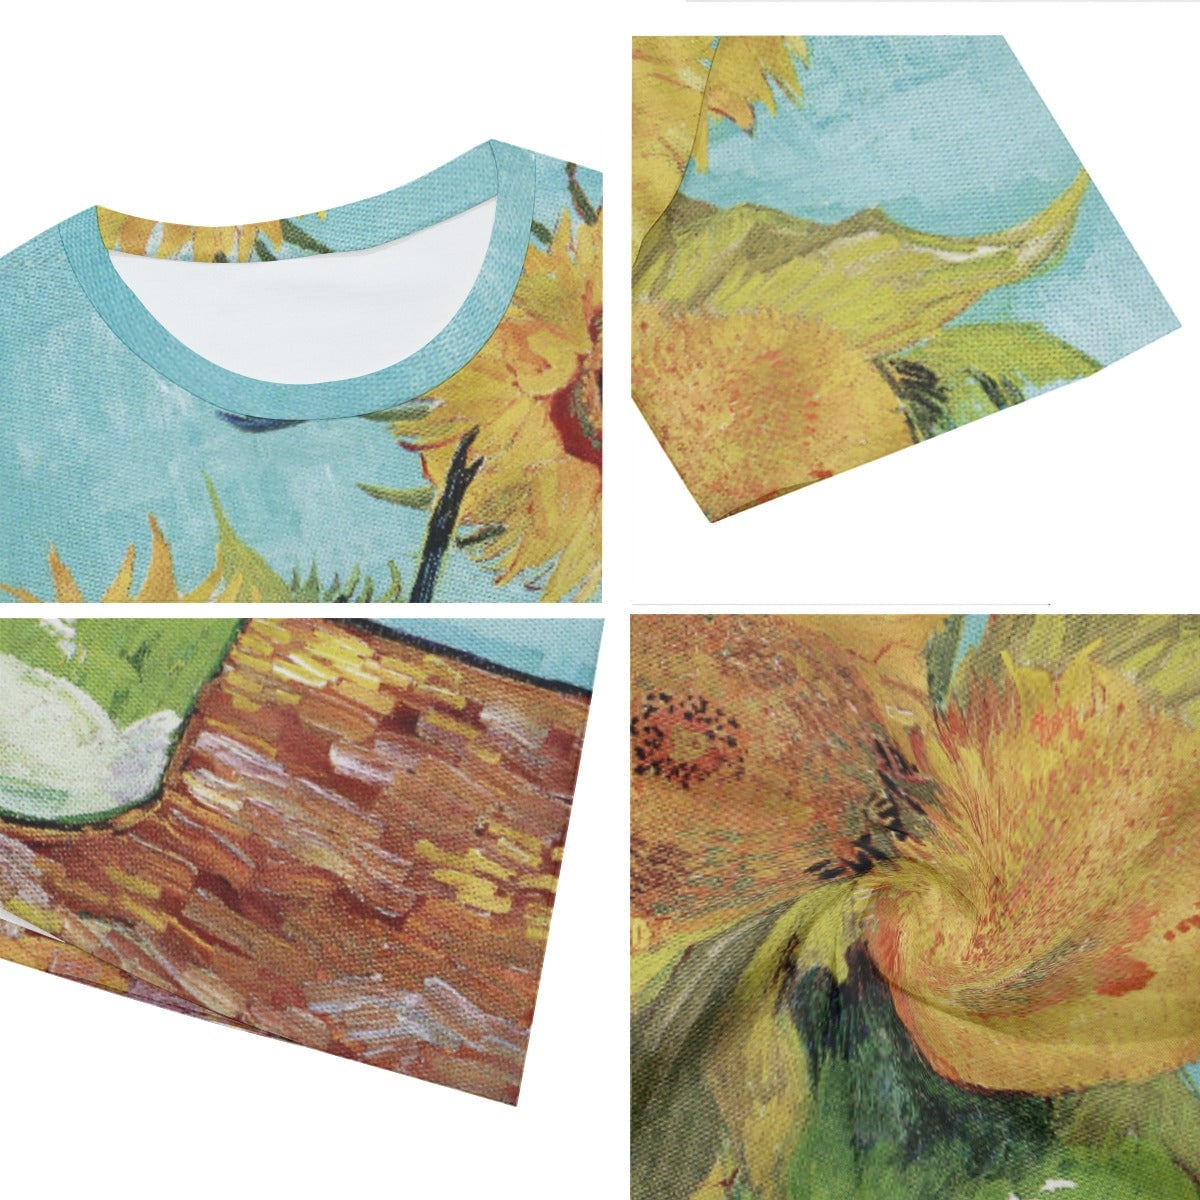 Vincent van Gogh’s Vase with Three Sunflowers T-Shirt